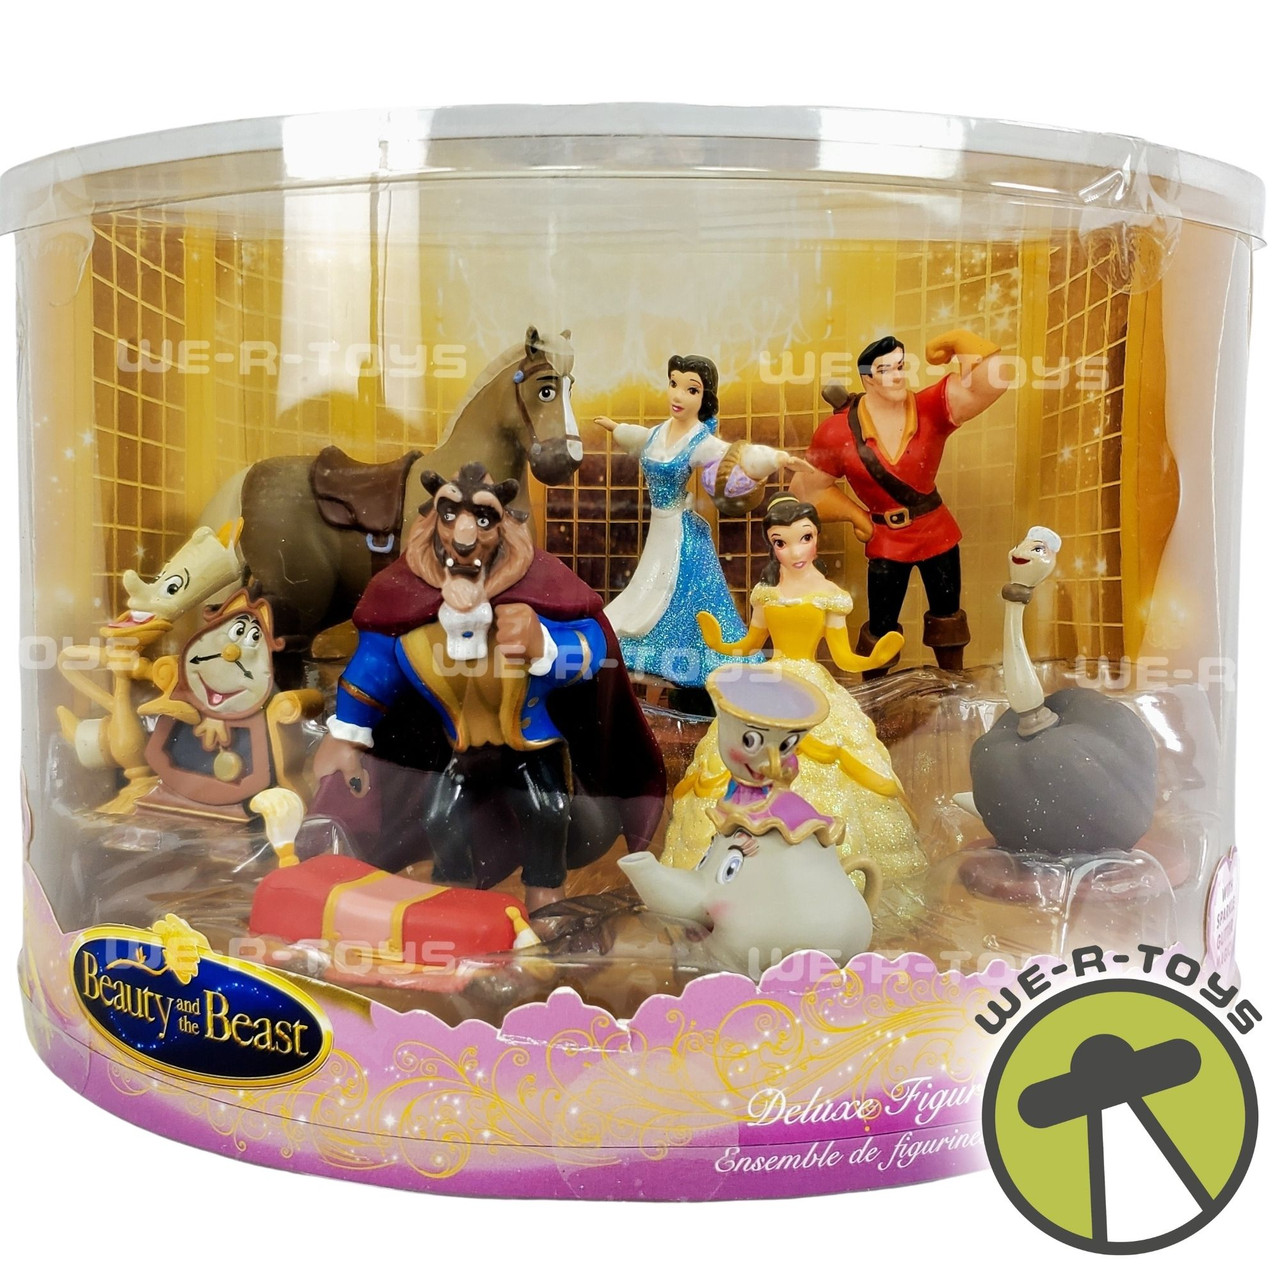 New Disney Store Princess Deluxe Figurine Playset Figures 10 Piece